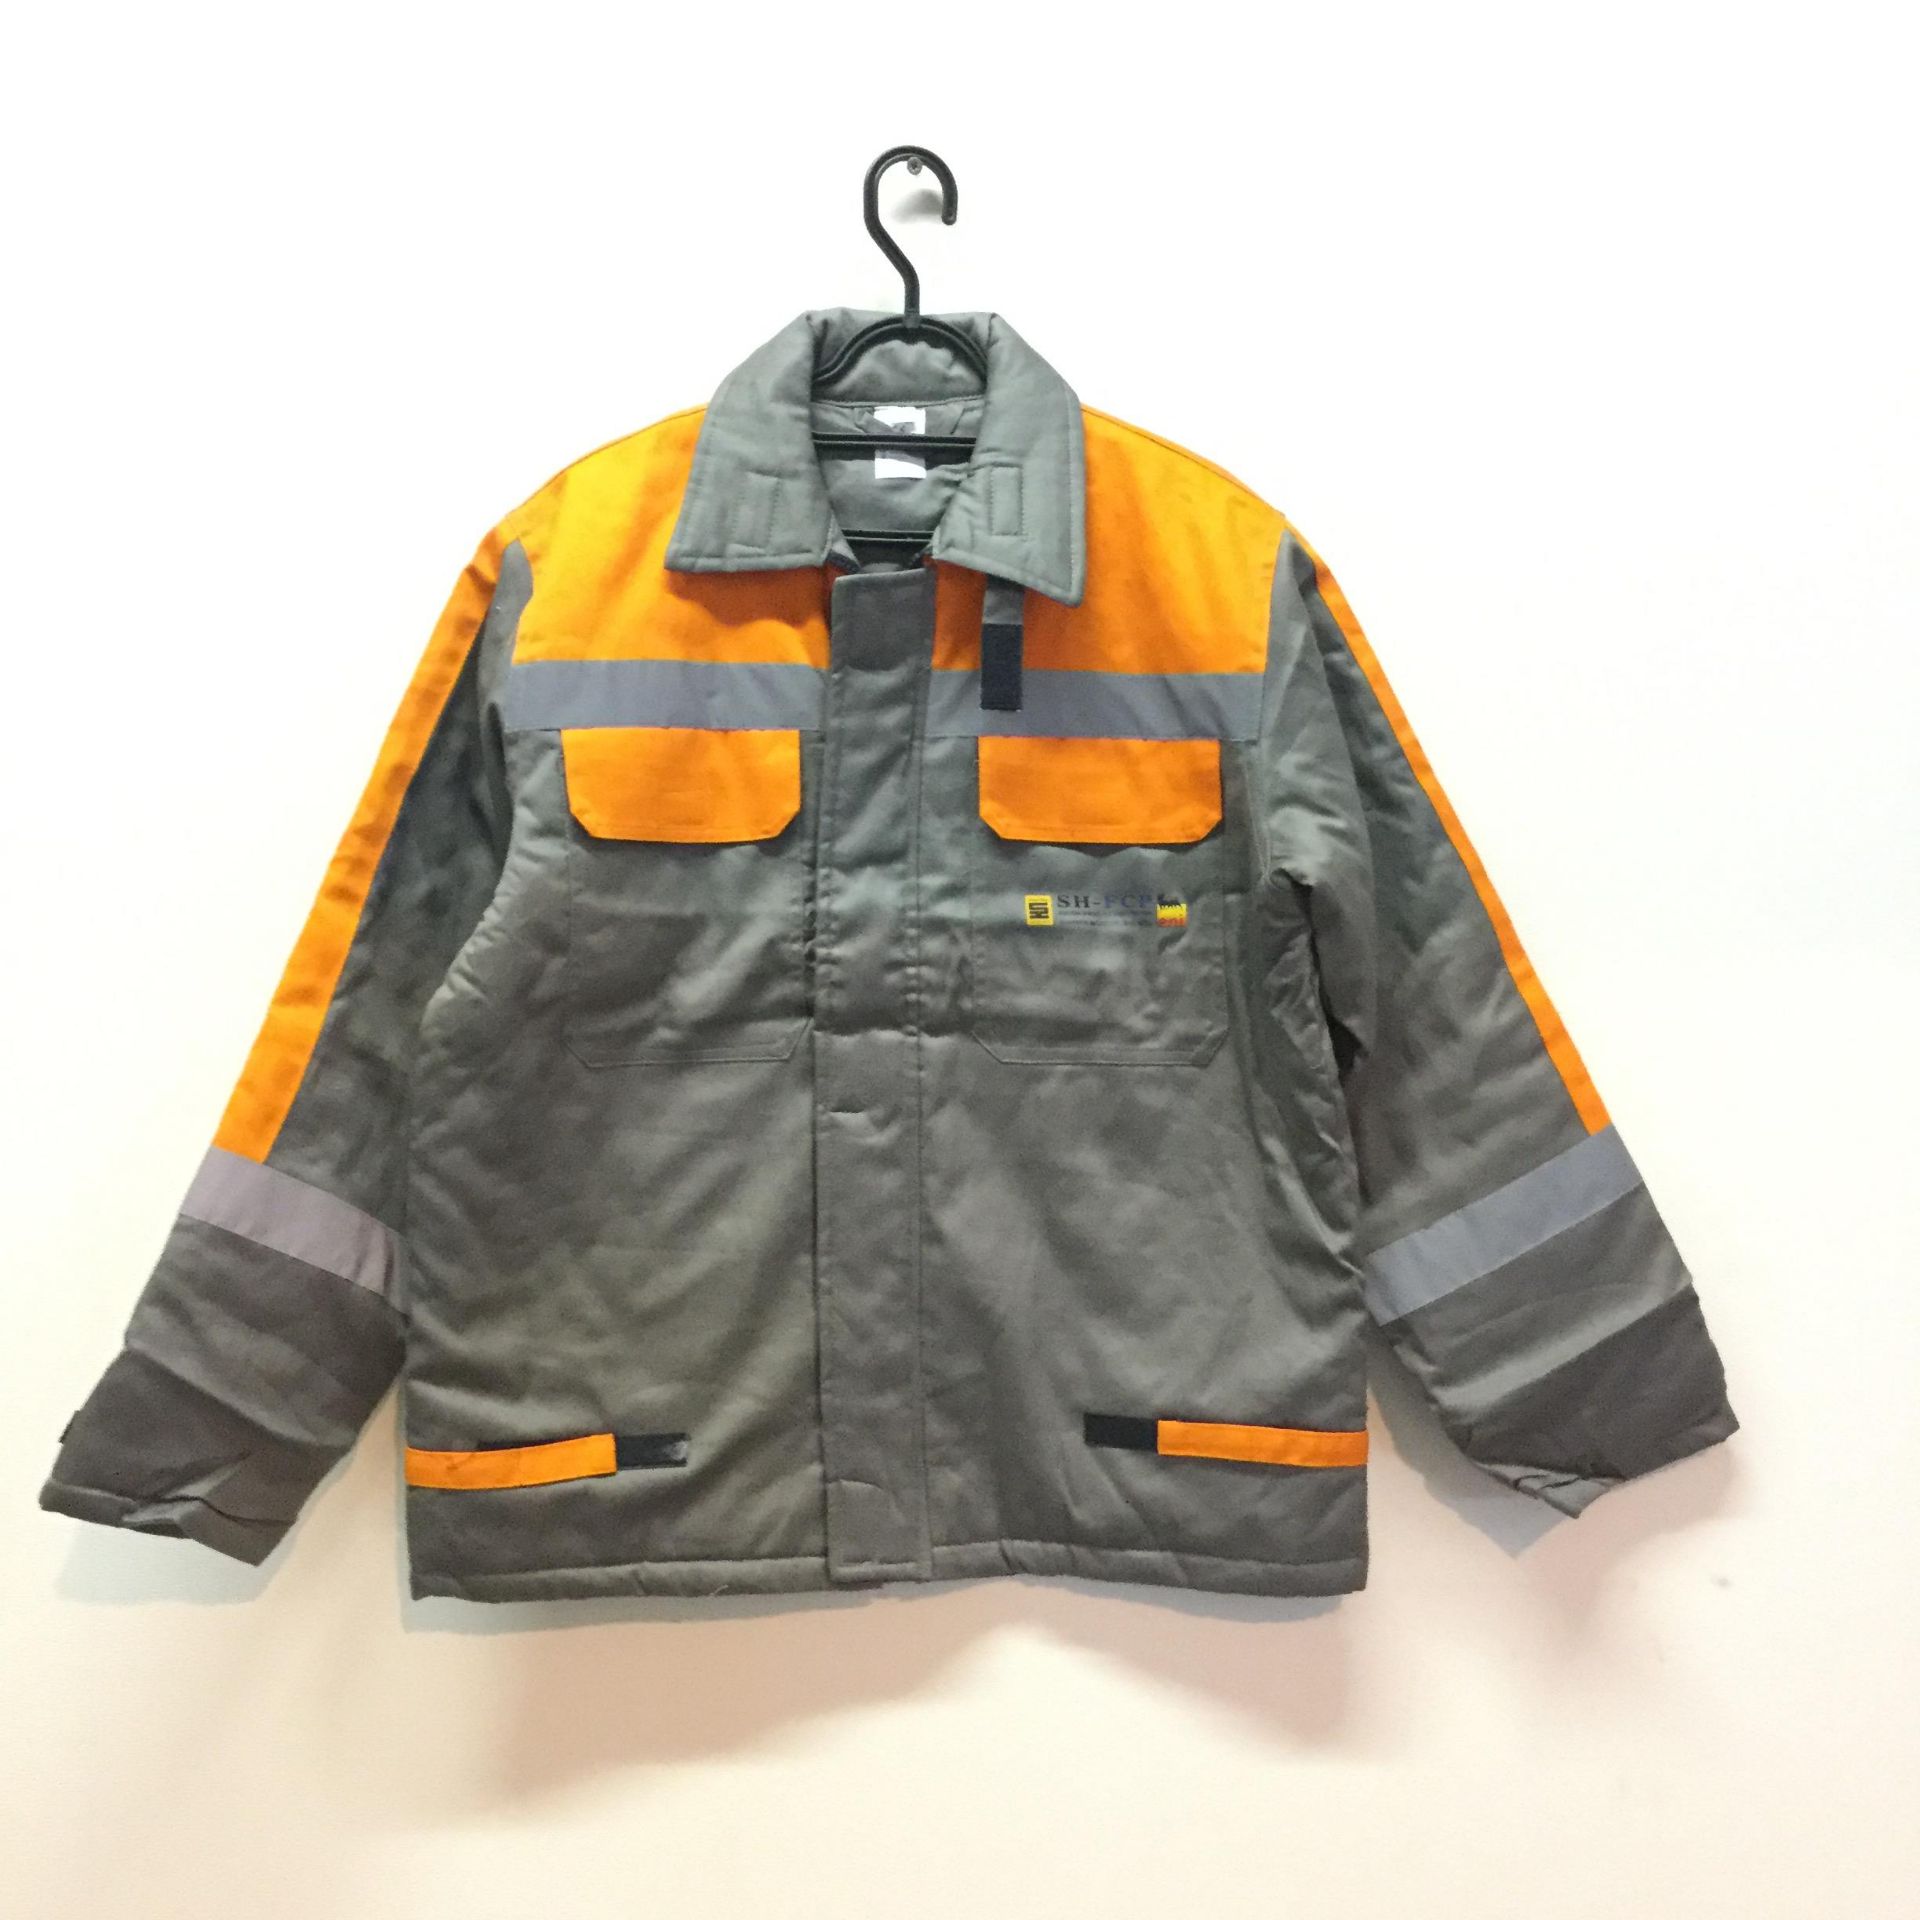 Flame Retardant Winter Jacket - Size 62